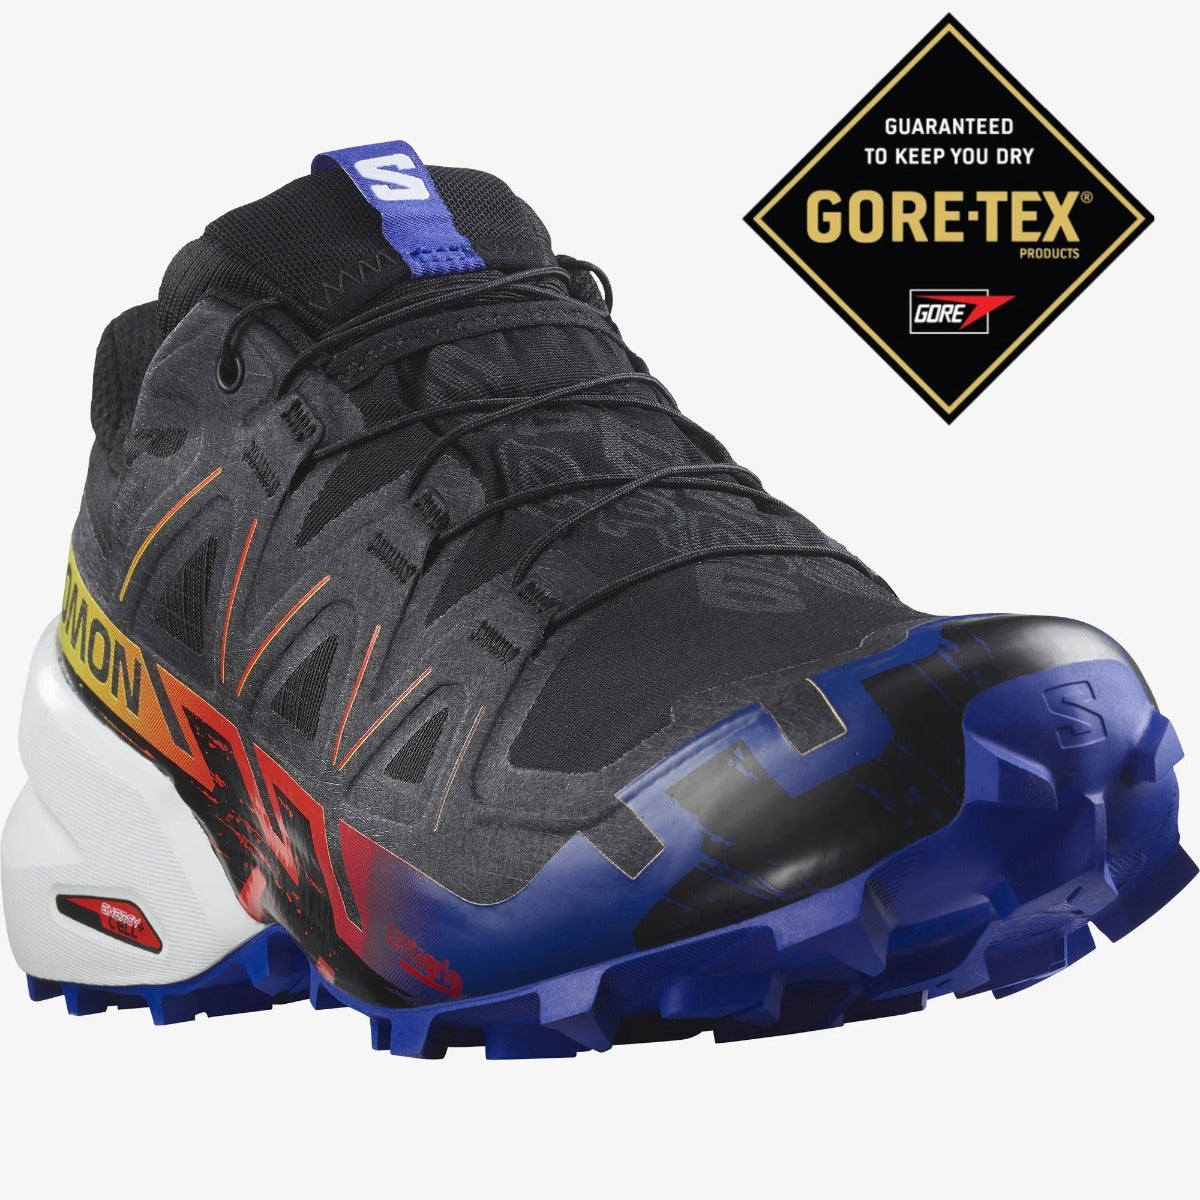 Salomon Speedcross 6 GORE-TEX Trail Running Shoe (Men's)